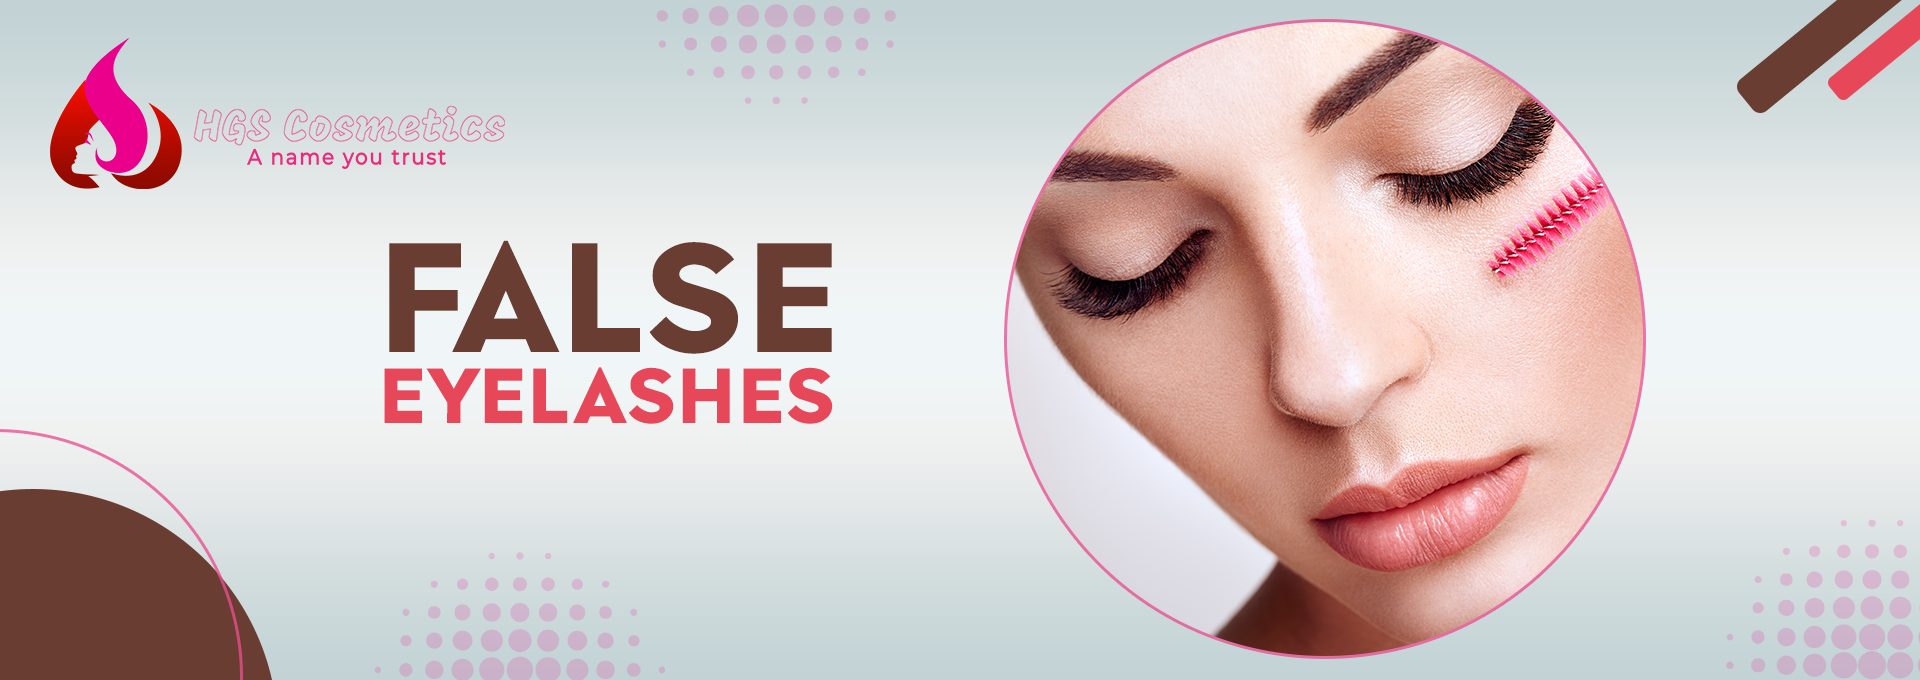 Shop Best False Eyelashes products Online @ HGS Cosmetics